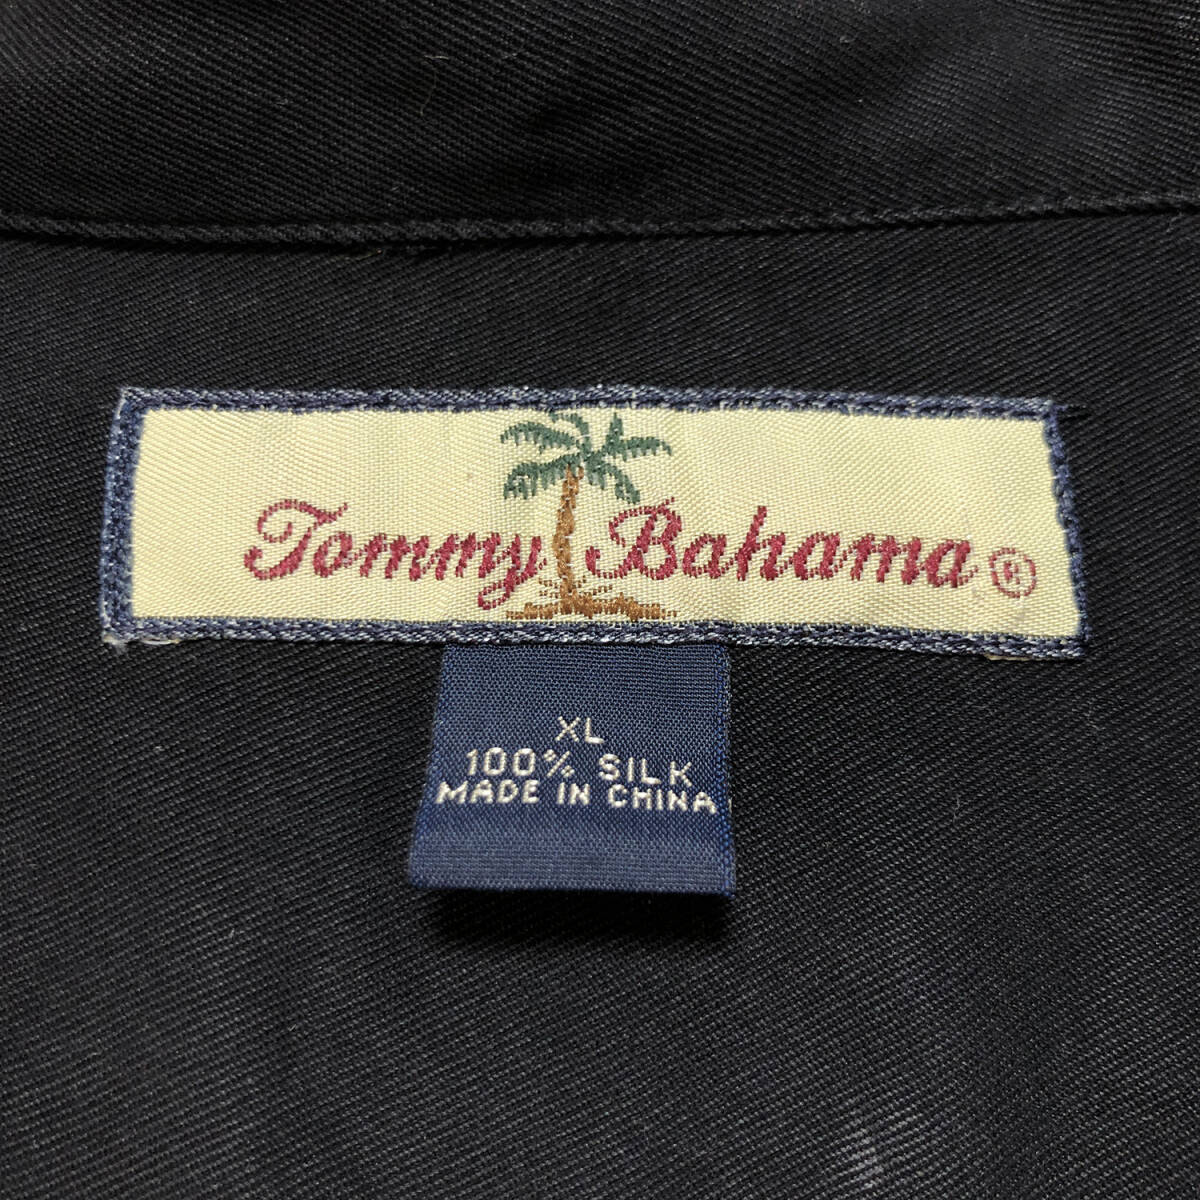 USA 古着 トミーバハマ アロハシャツ キャンプシャツ 開襟 オープンカラー シルク 刺繍 ブラック 黒 メンズXL BF1648